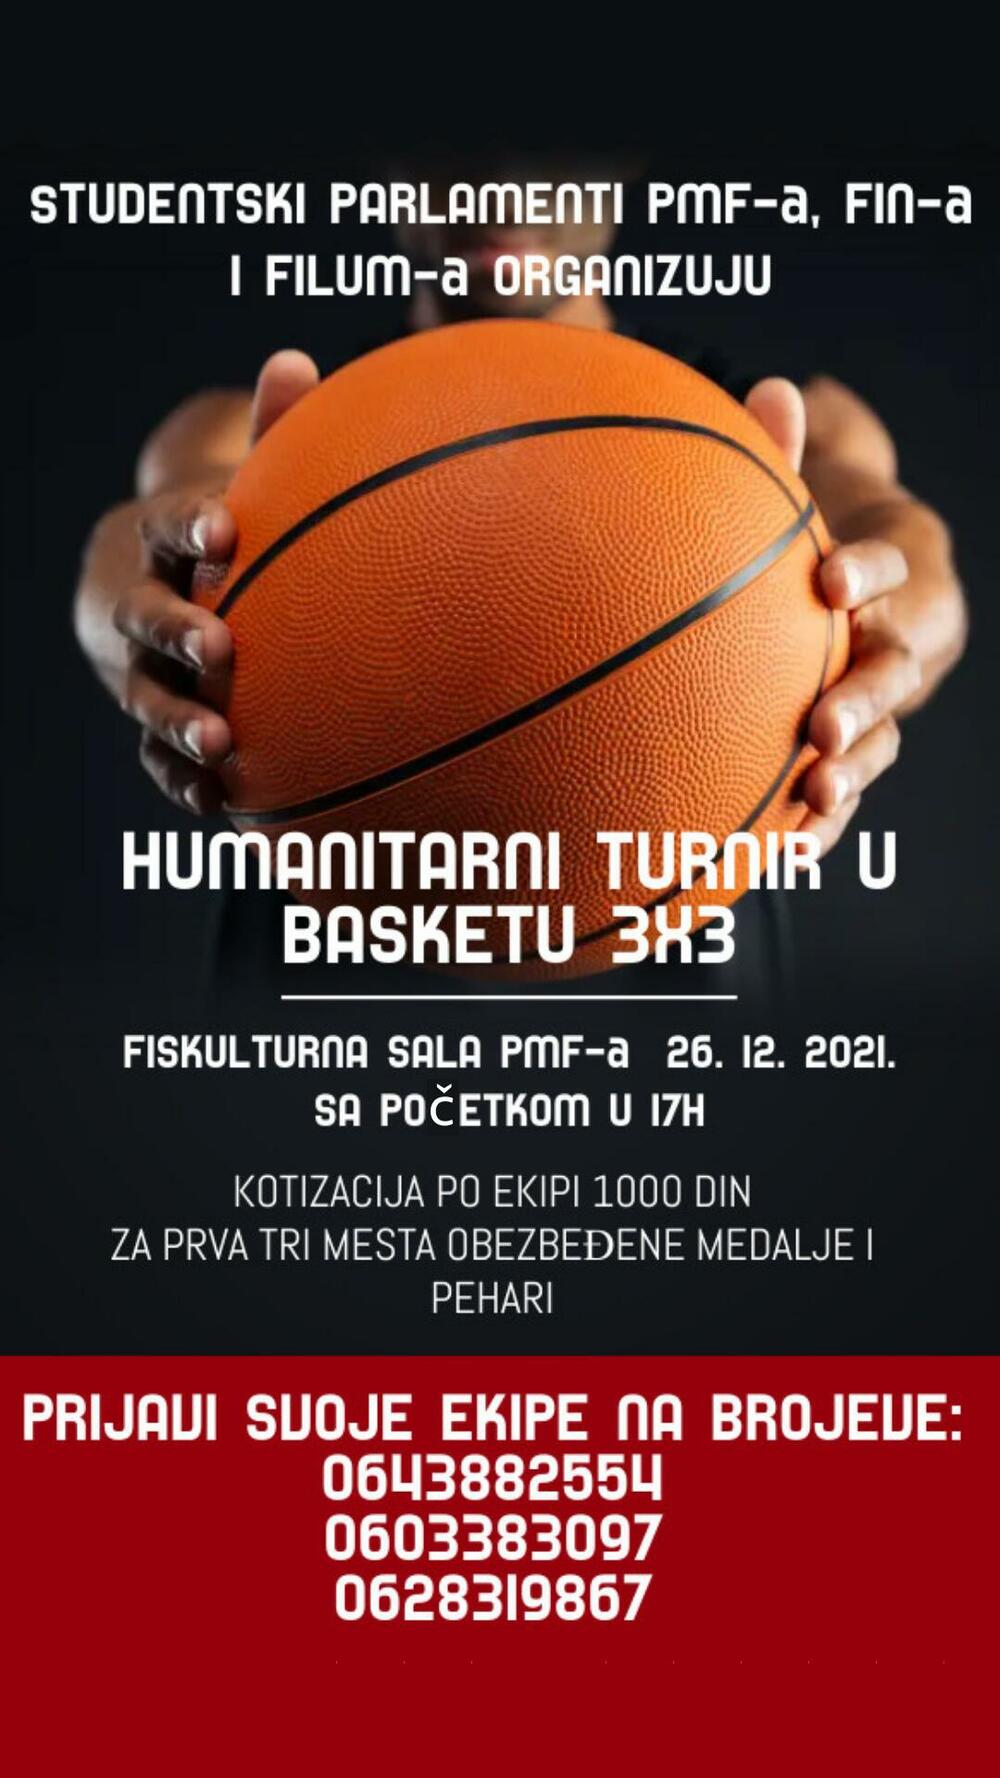 Humanitarni turnir u basketu 3x3